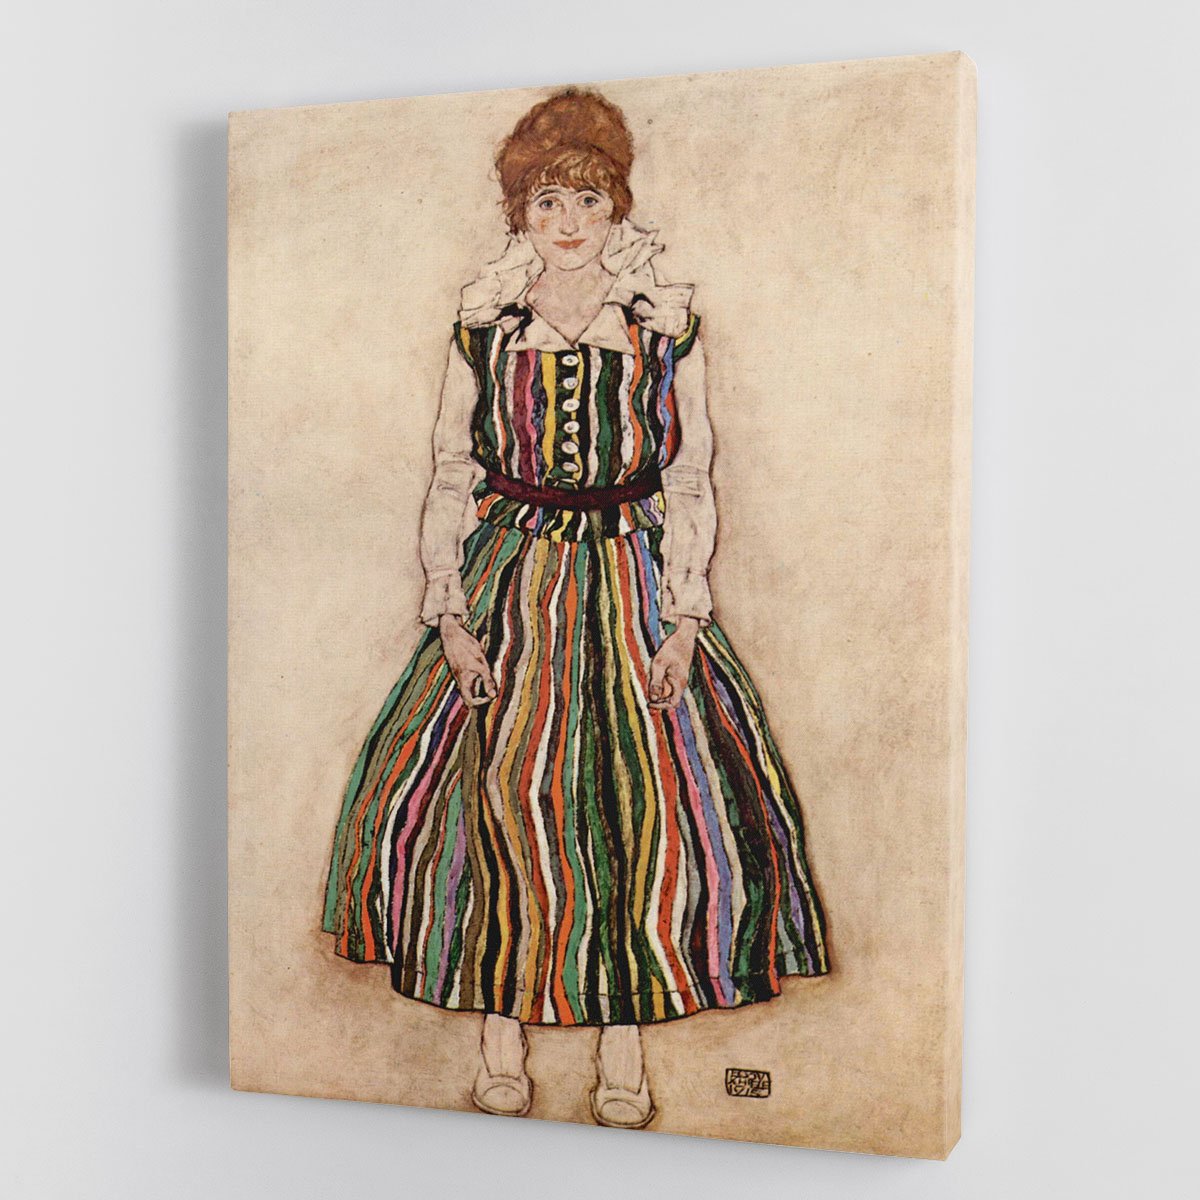 Portrait of Edith Egon Schiele in a striped dress by Egon Schiele Canvas Print or Poster